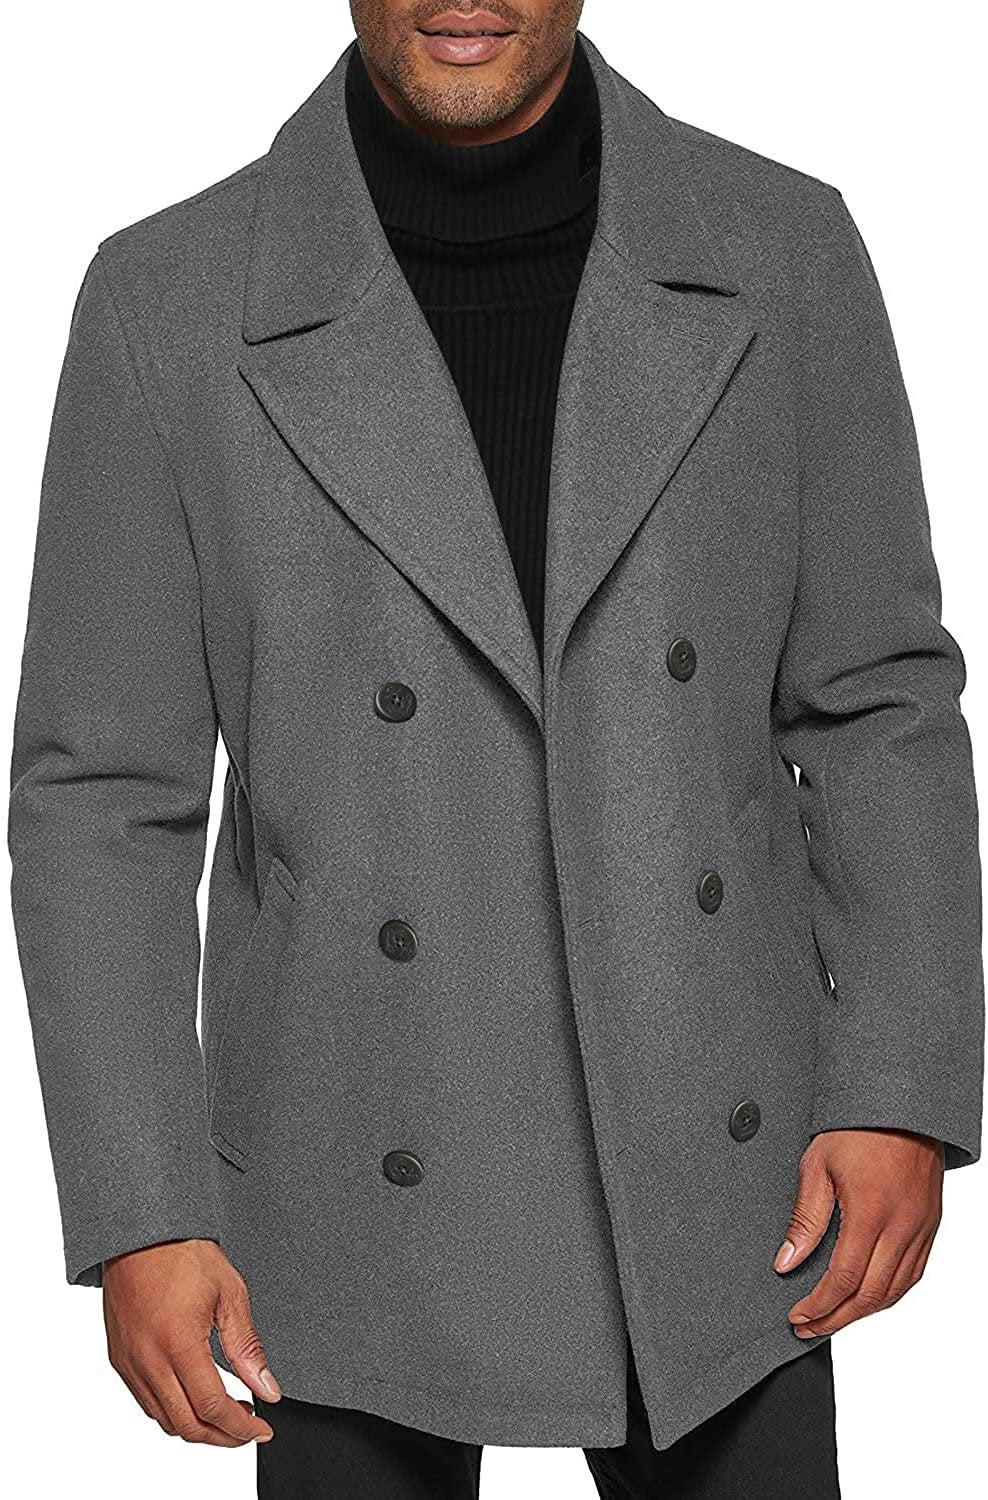 Michael Kors Mens Double Breasted Jacket Wool-Blend Pea Coat